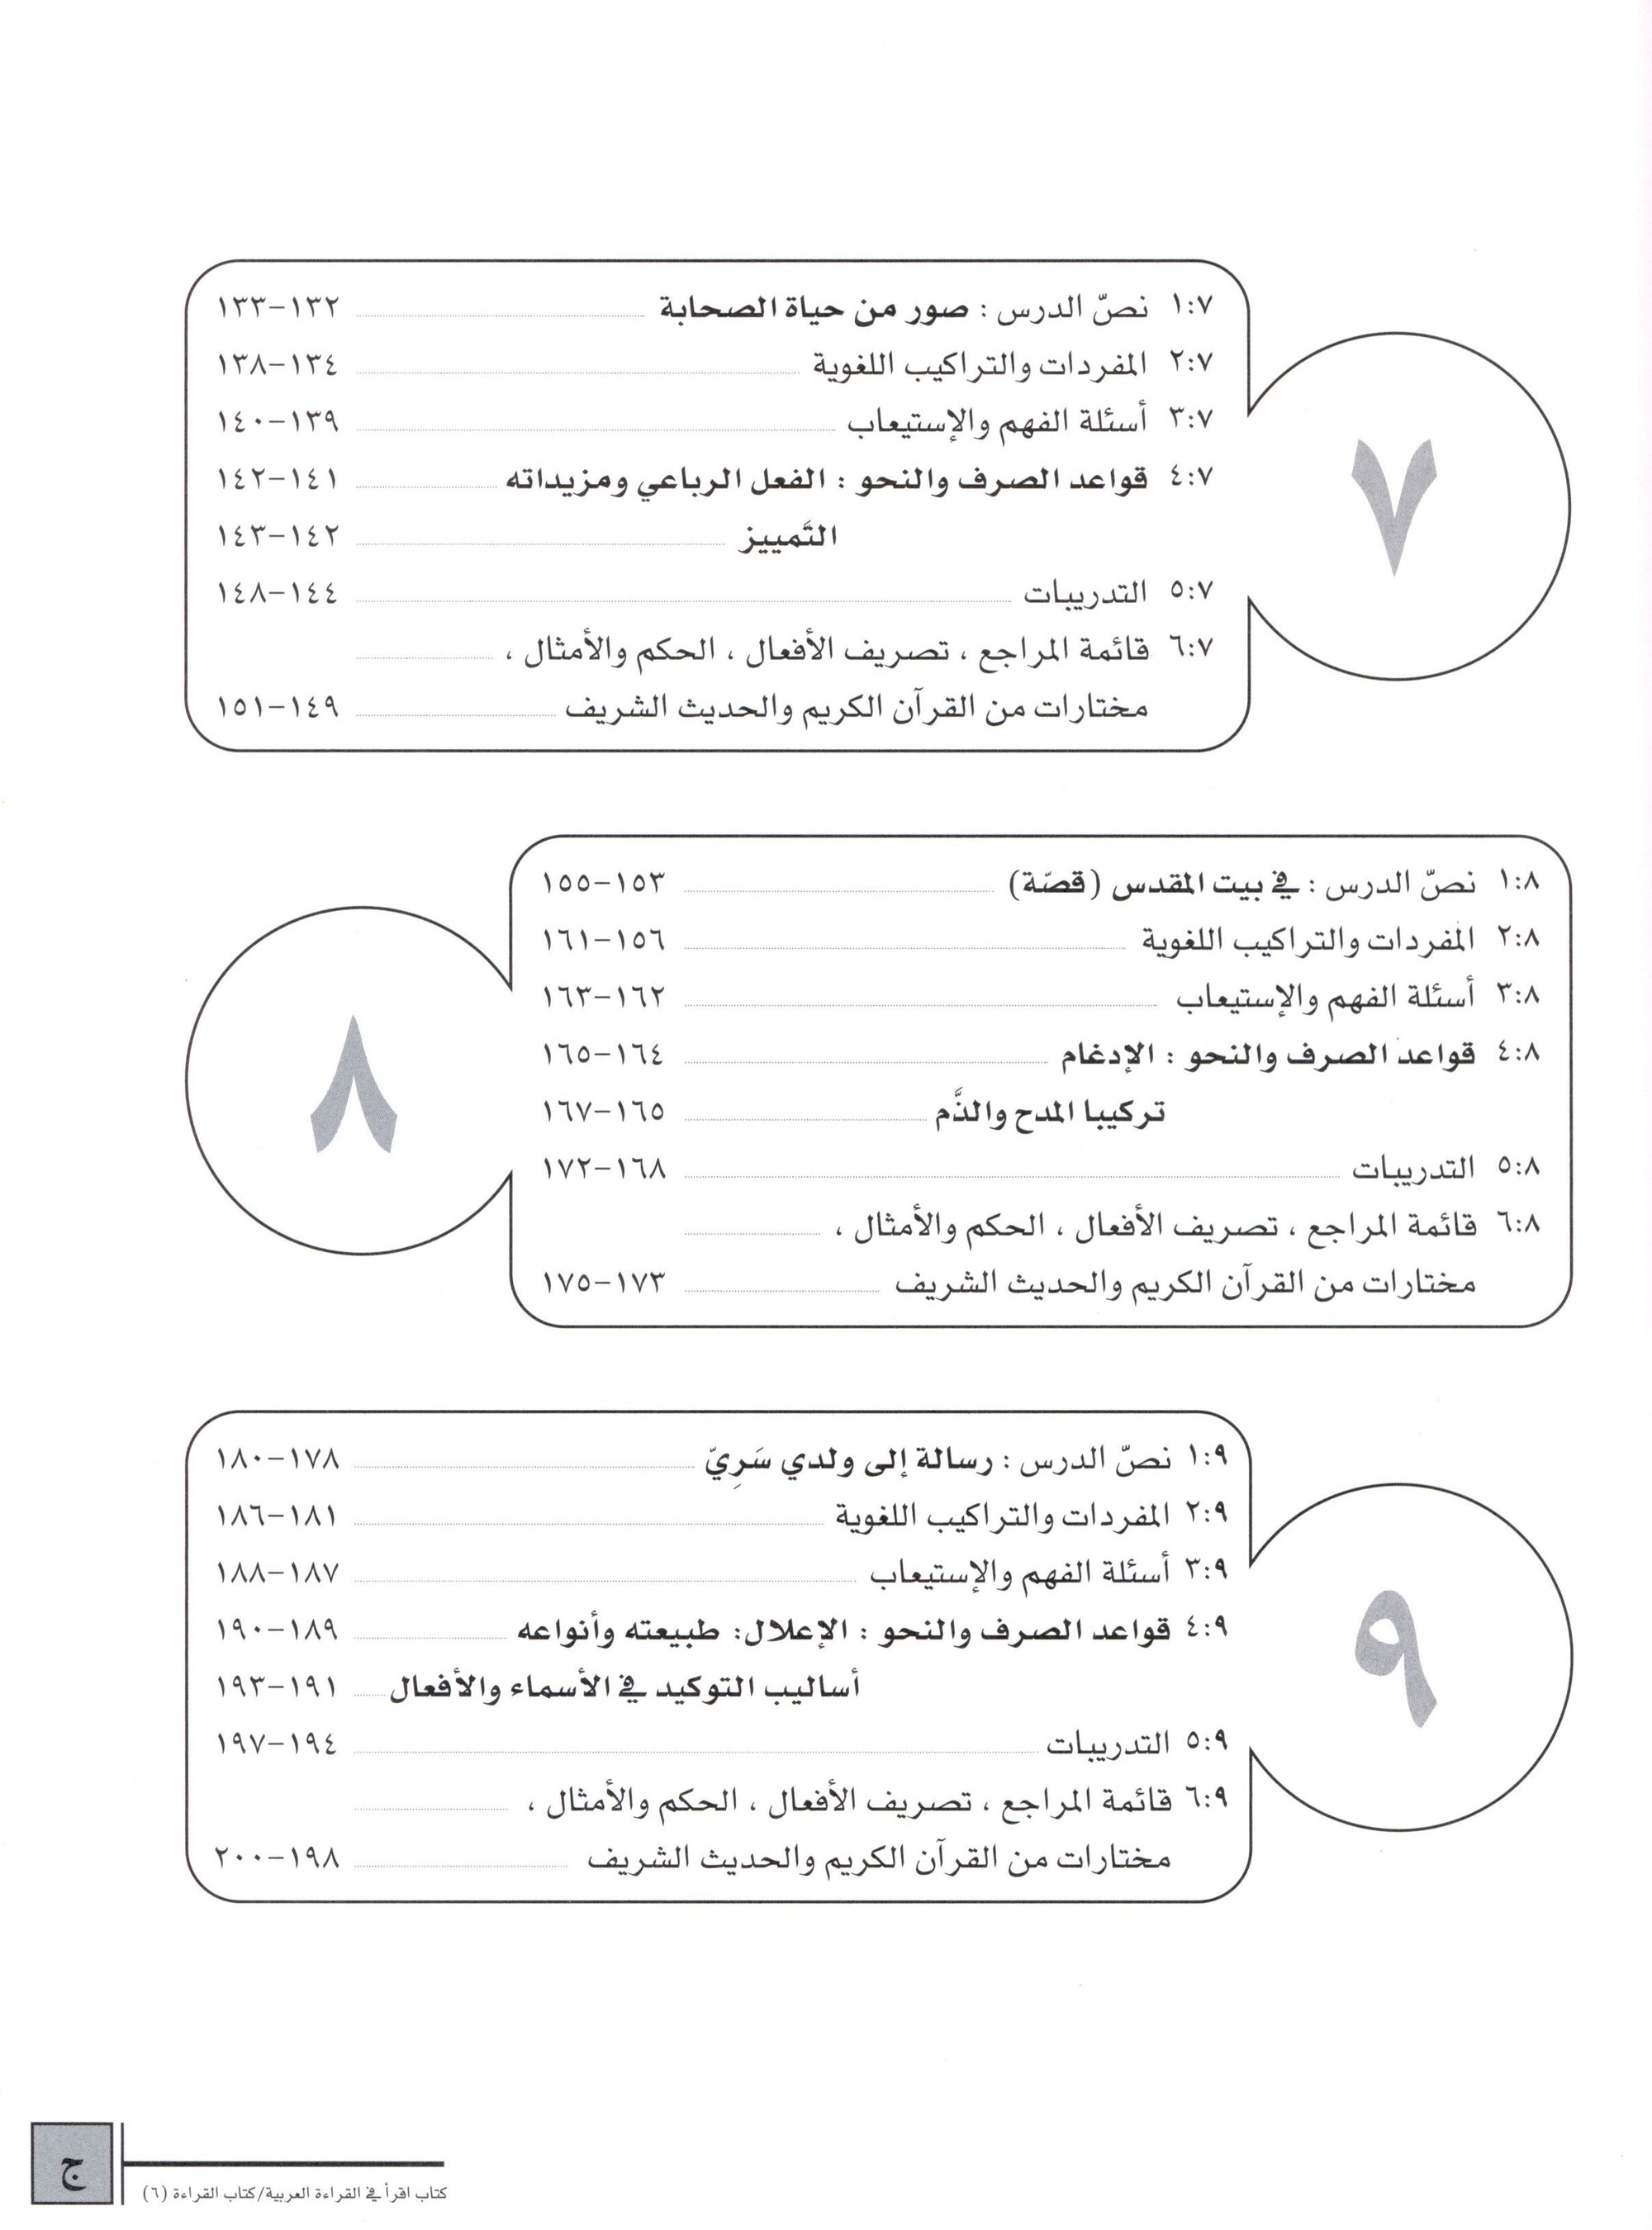 IQRA' Arabic Reader Textbook Level 6